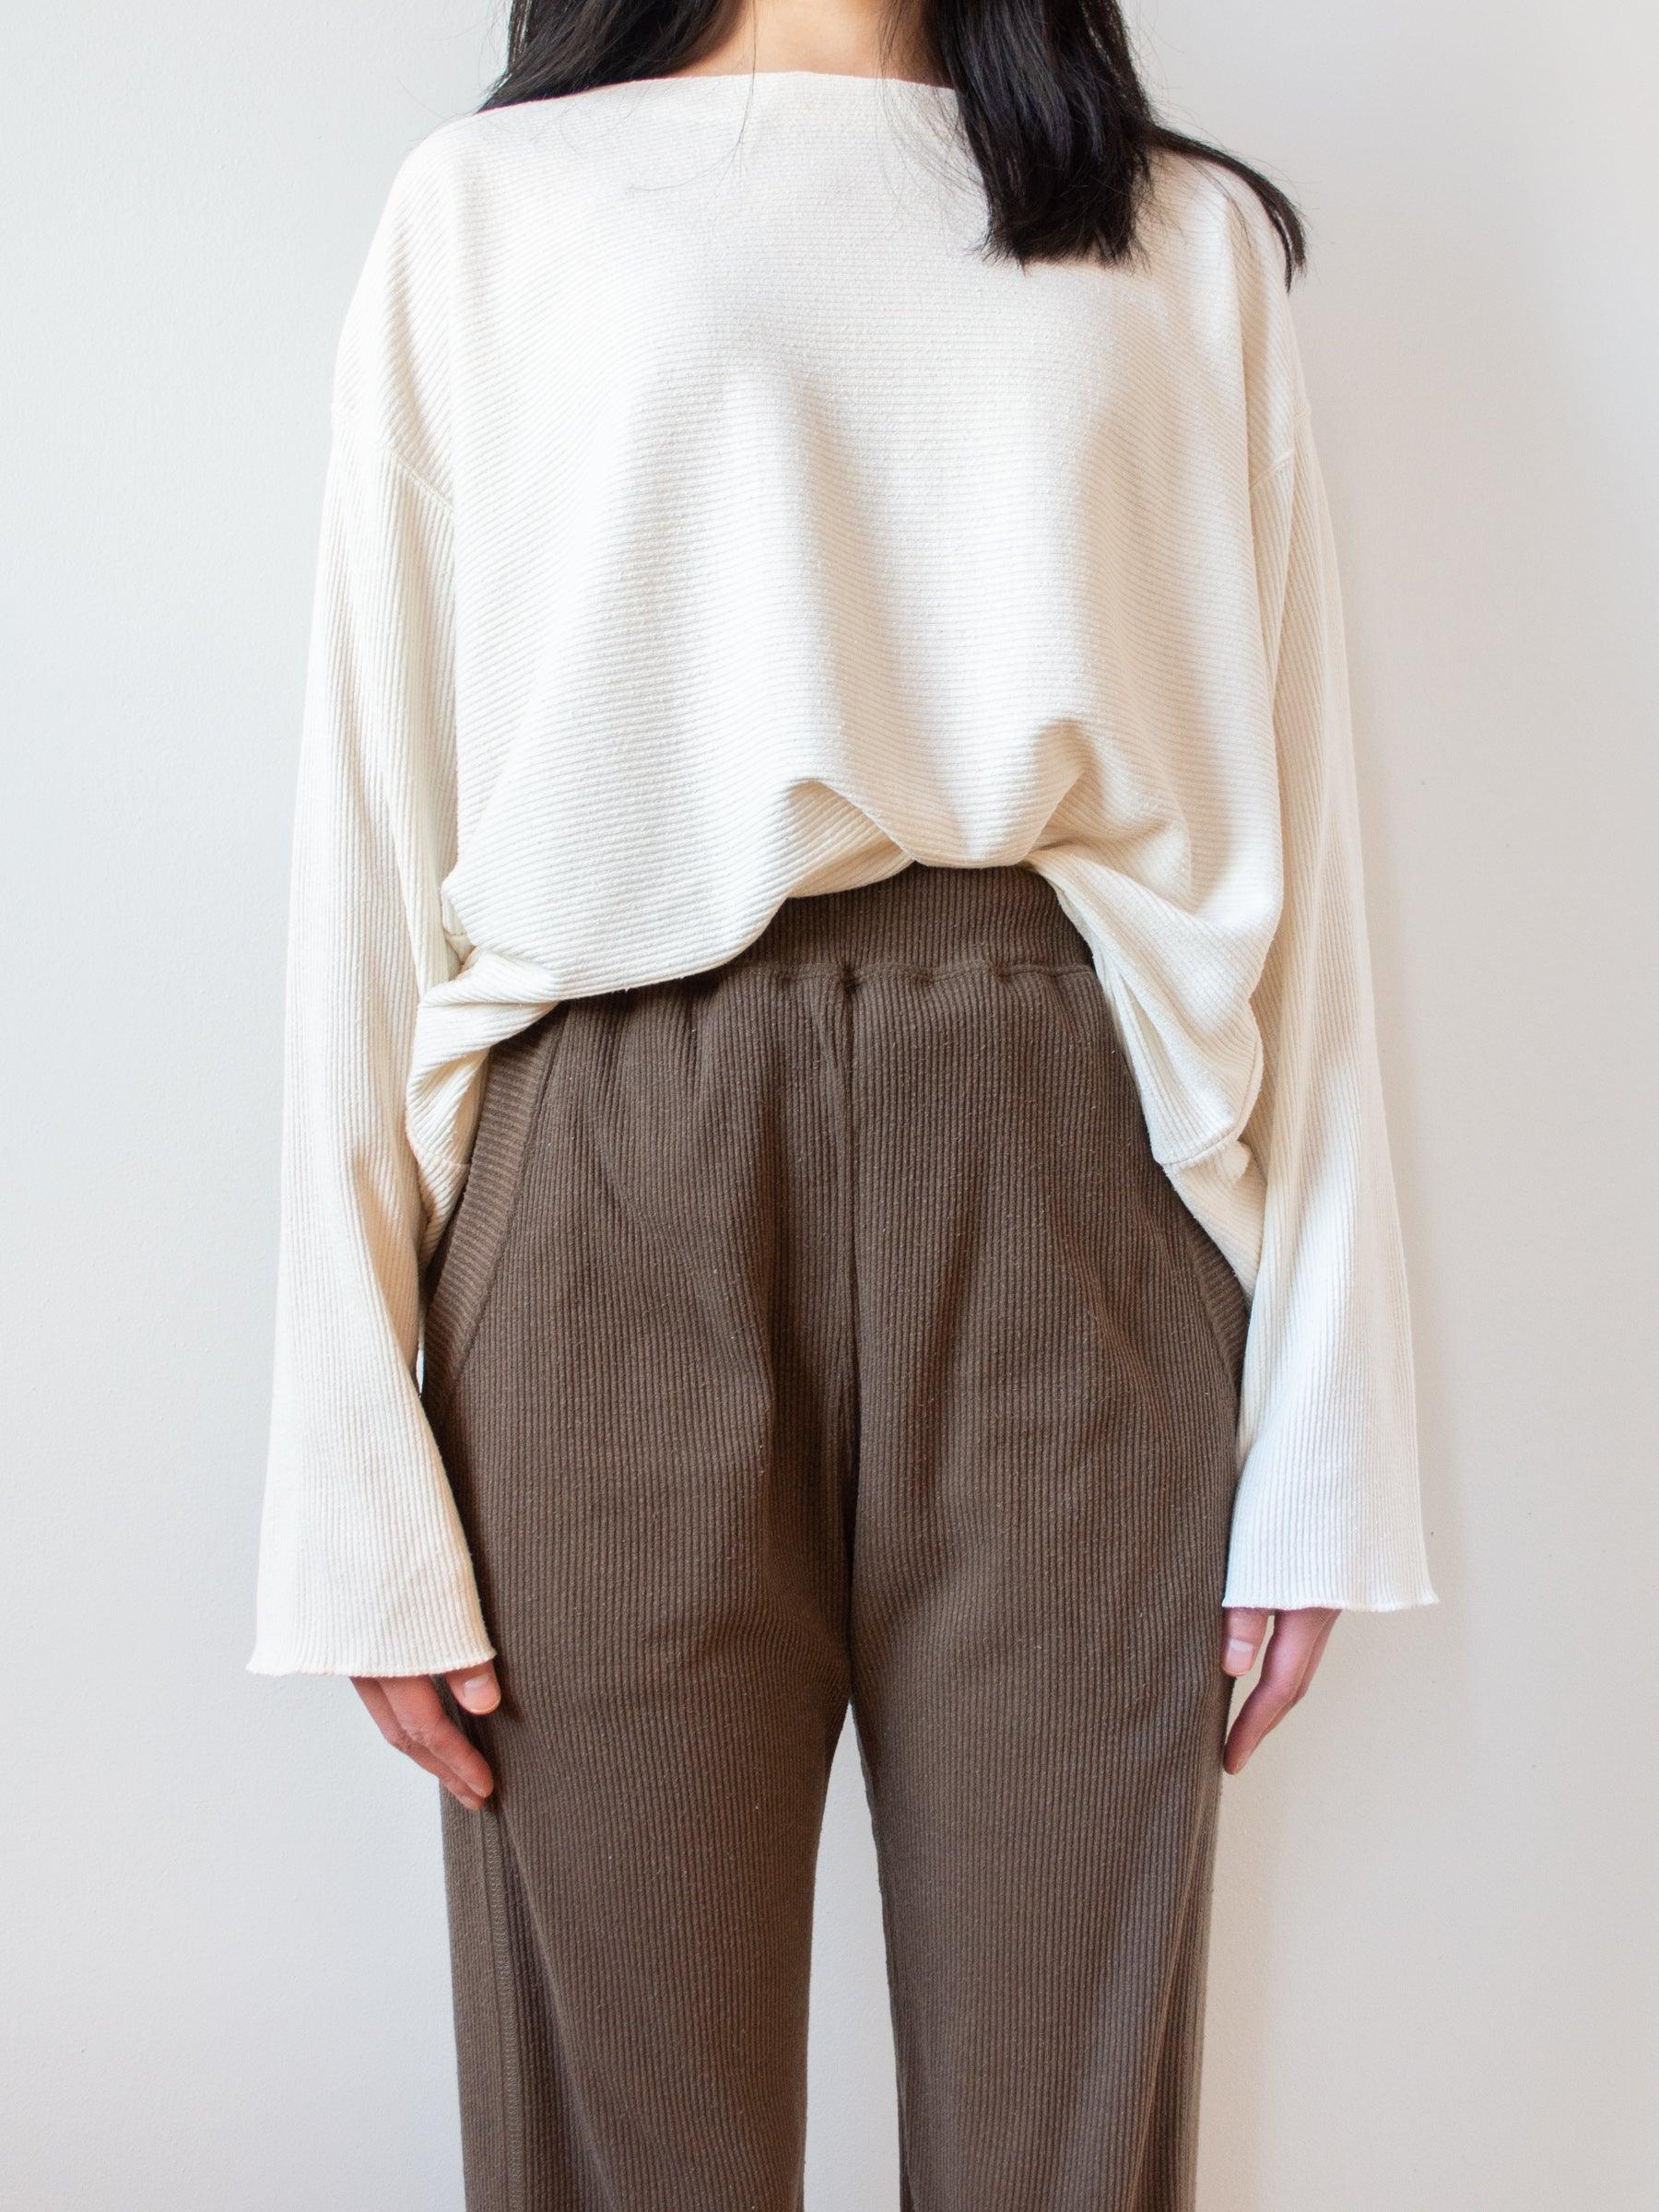 Namu Shop - Unfil Raw Silk Ribbed Jersey Pants - Coffee Brown